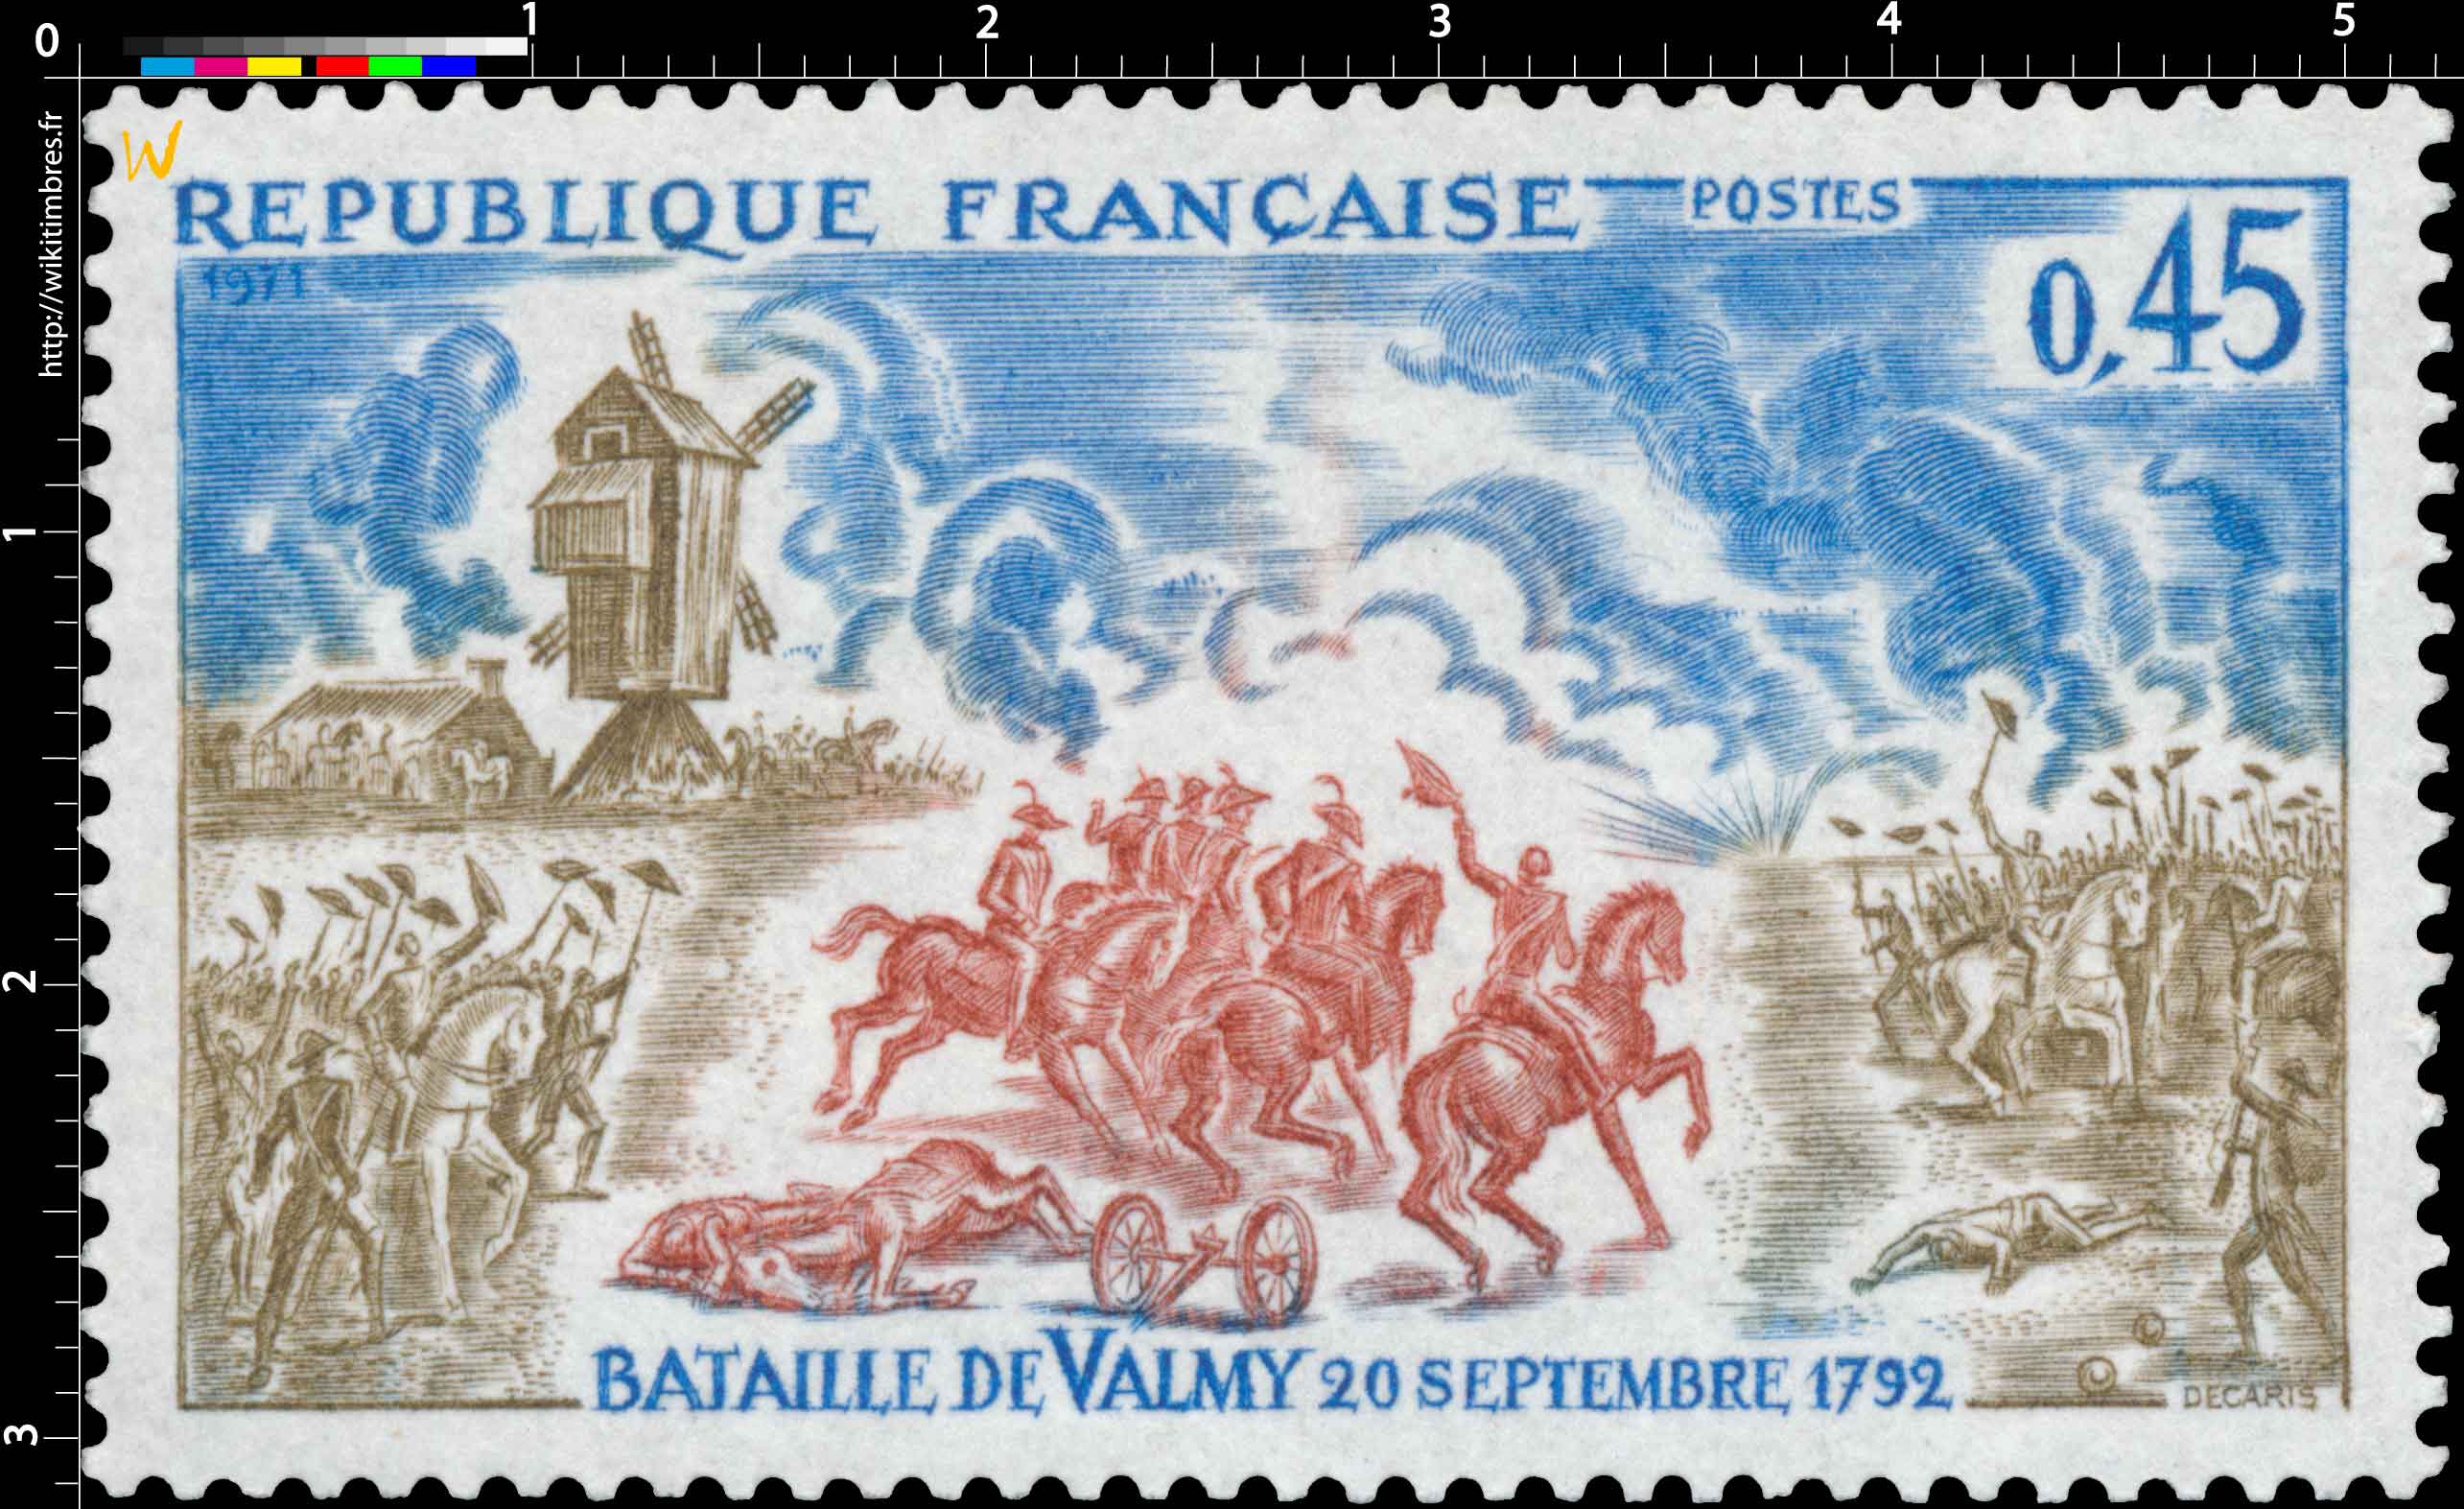 1971 BATAILLE DE VALMY 20 SEPTEMBRE, 1792